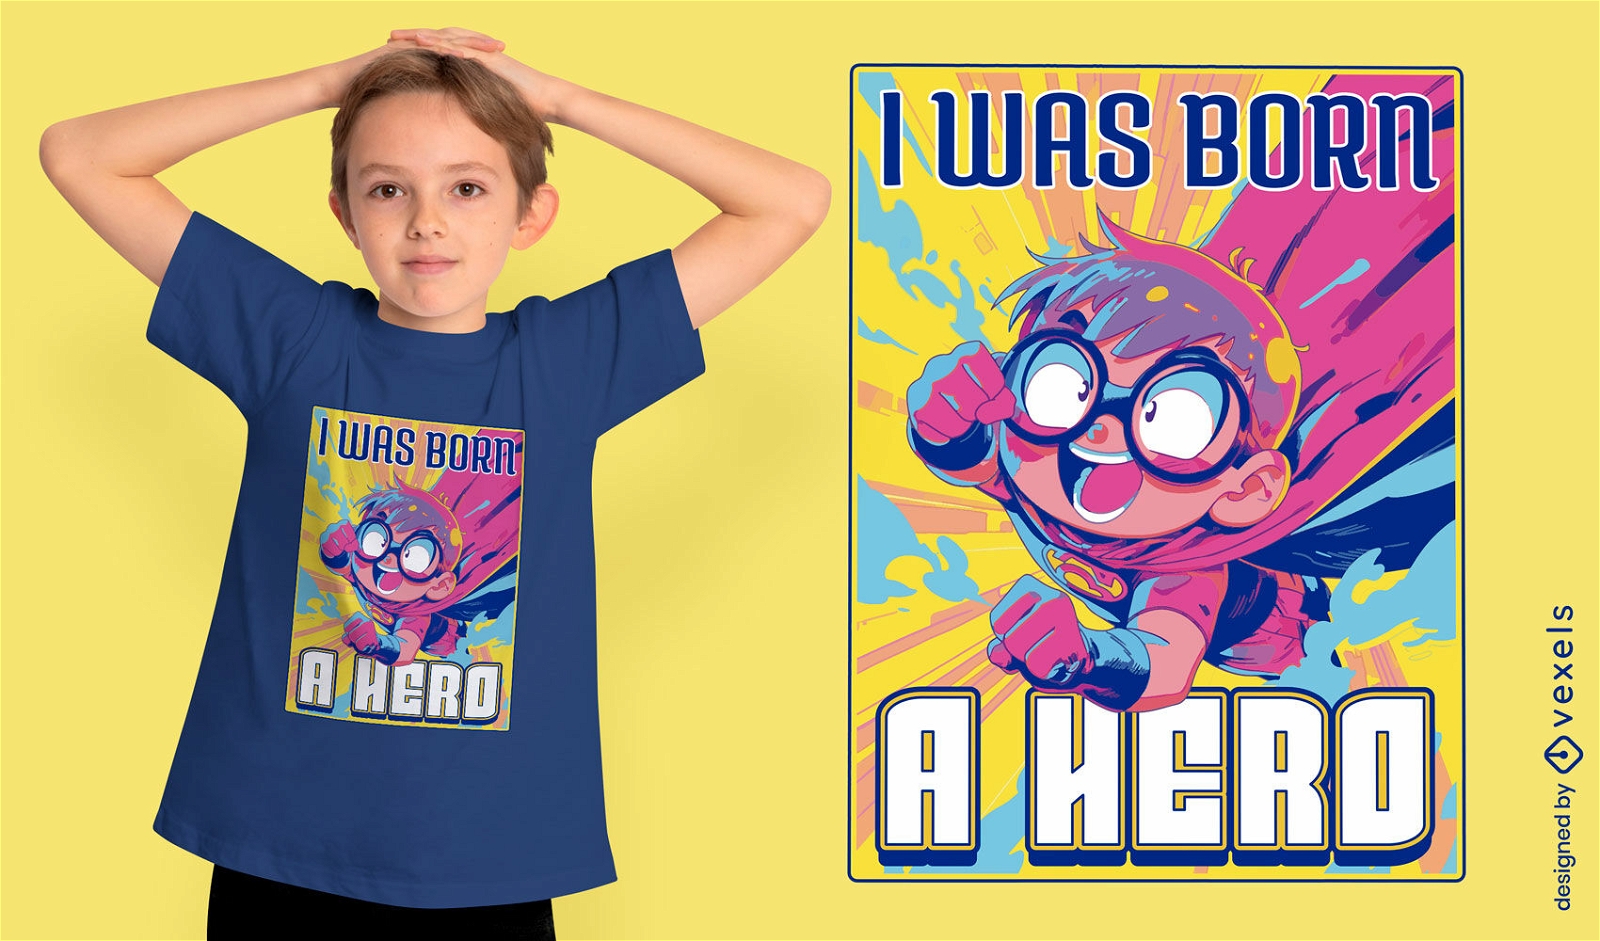 I was born a hero t-shirt design